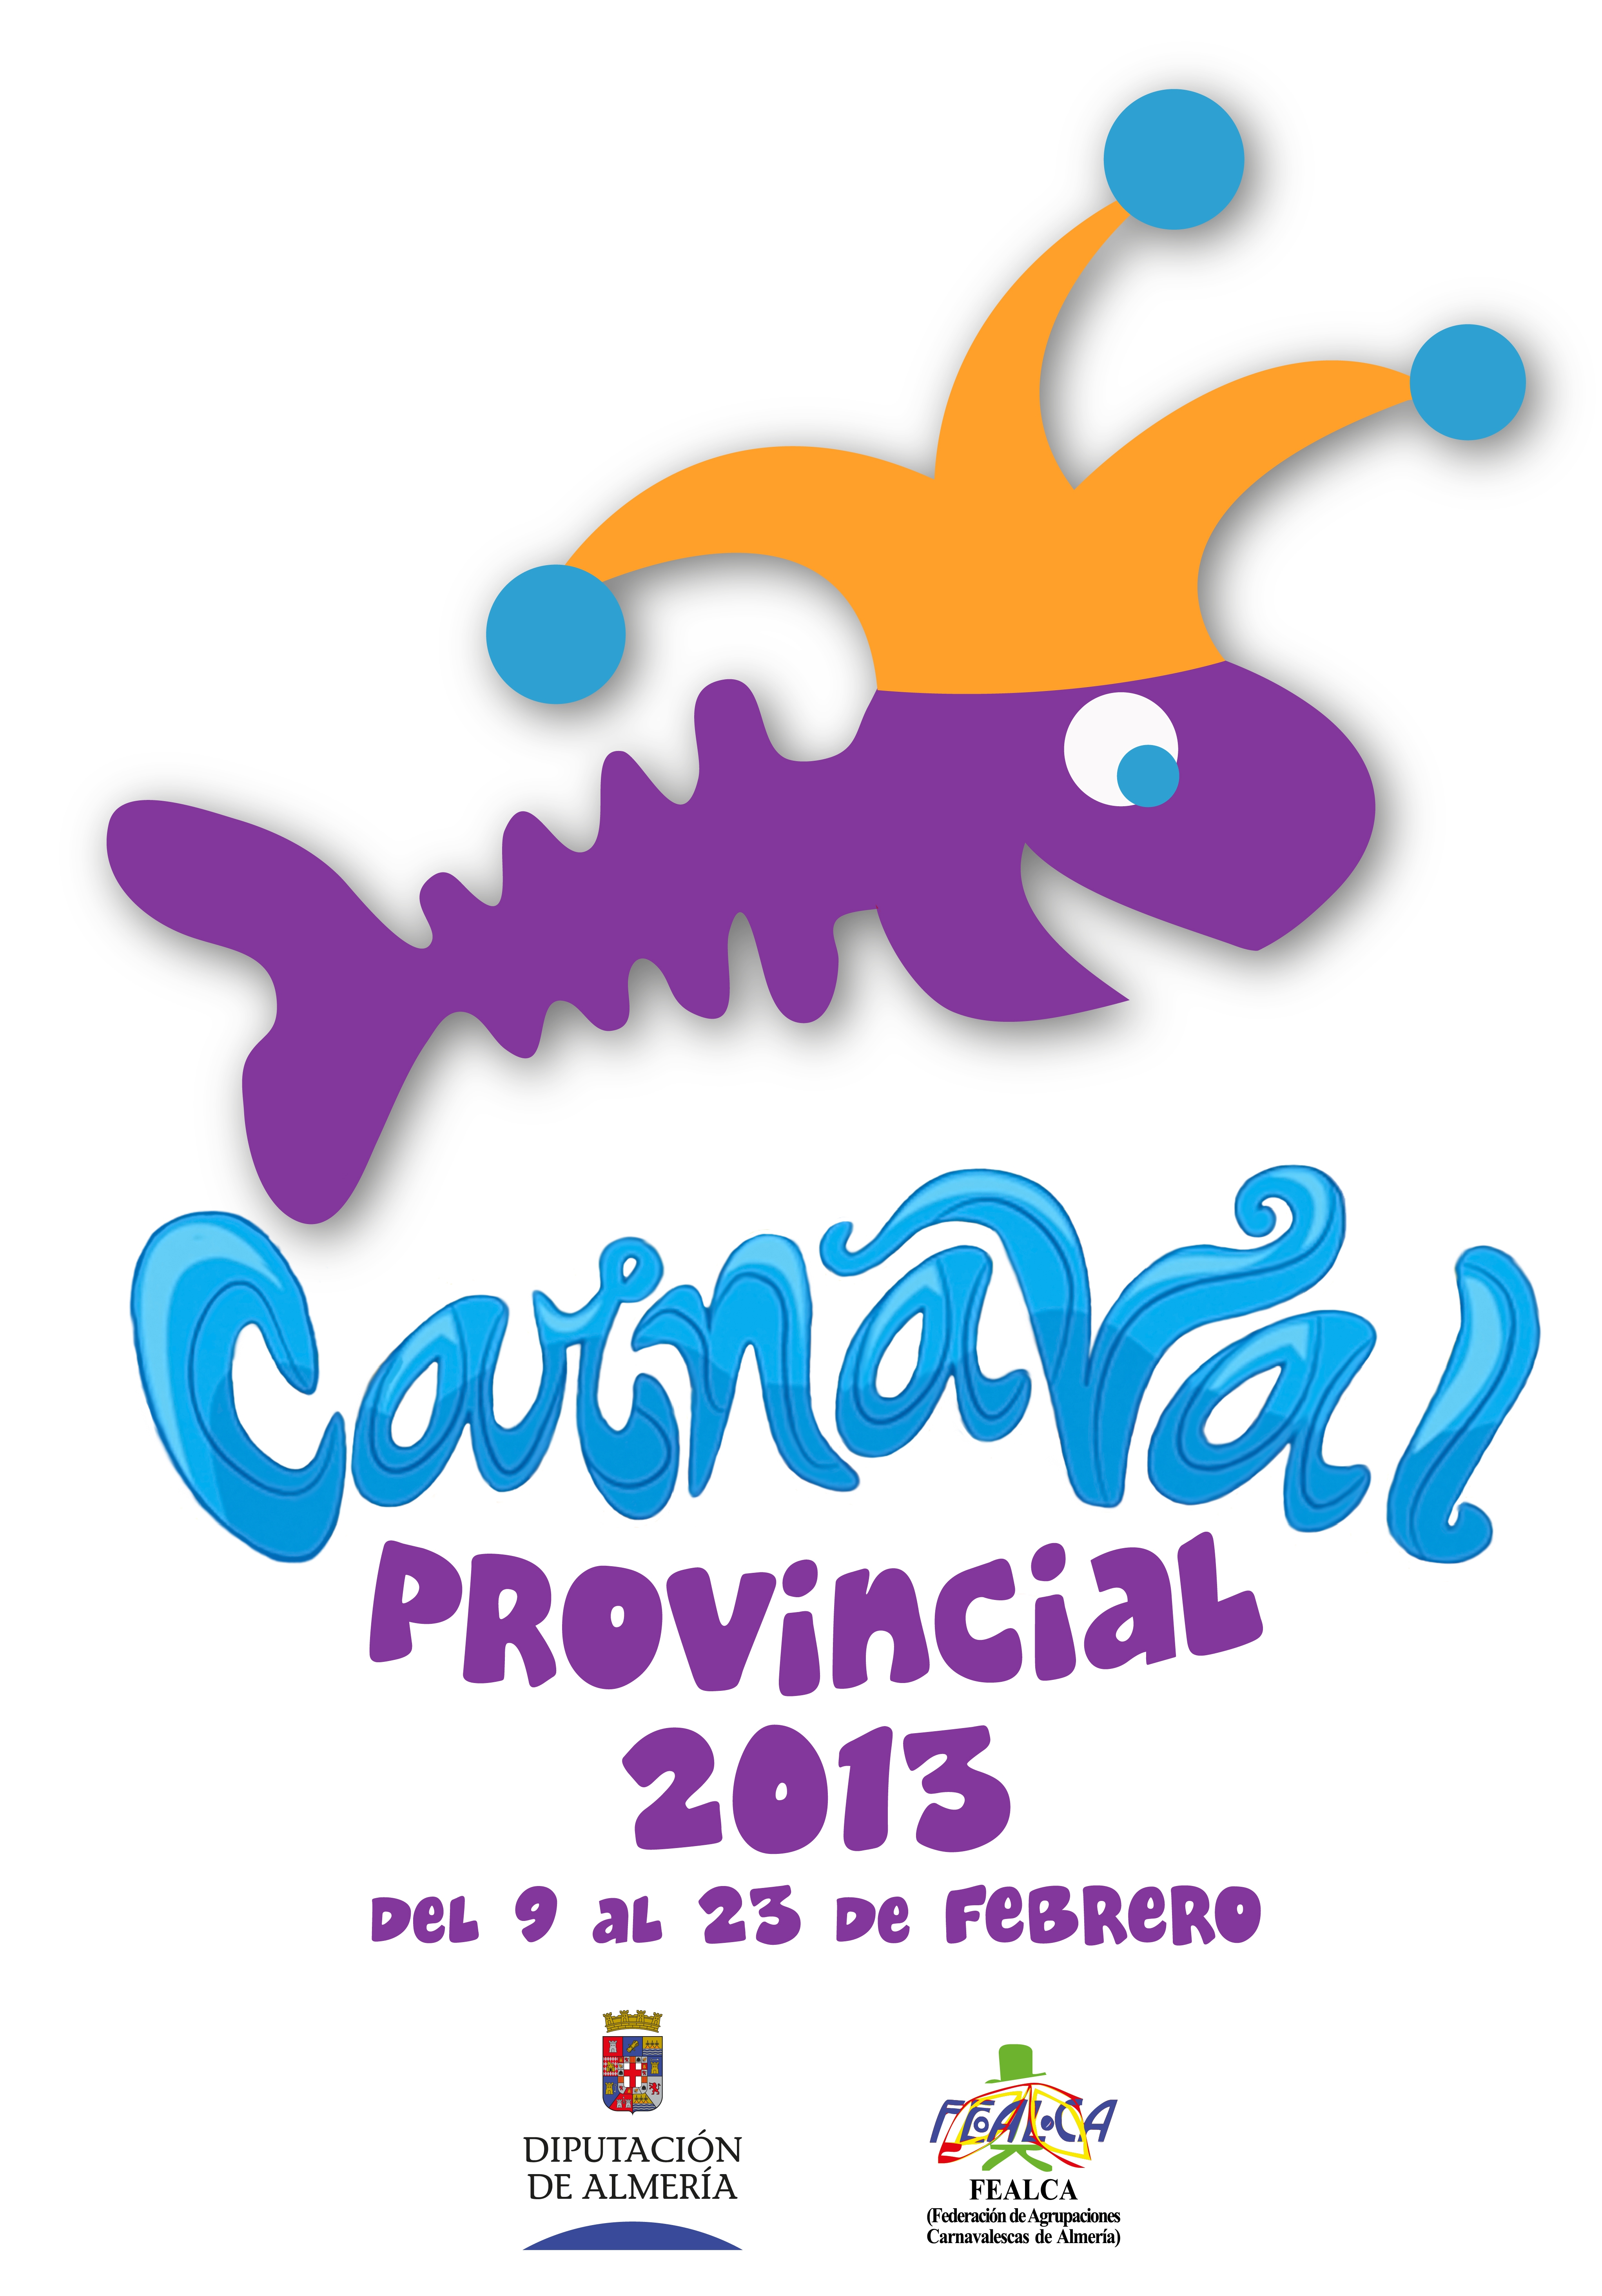 Carnaval Provincial 2013